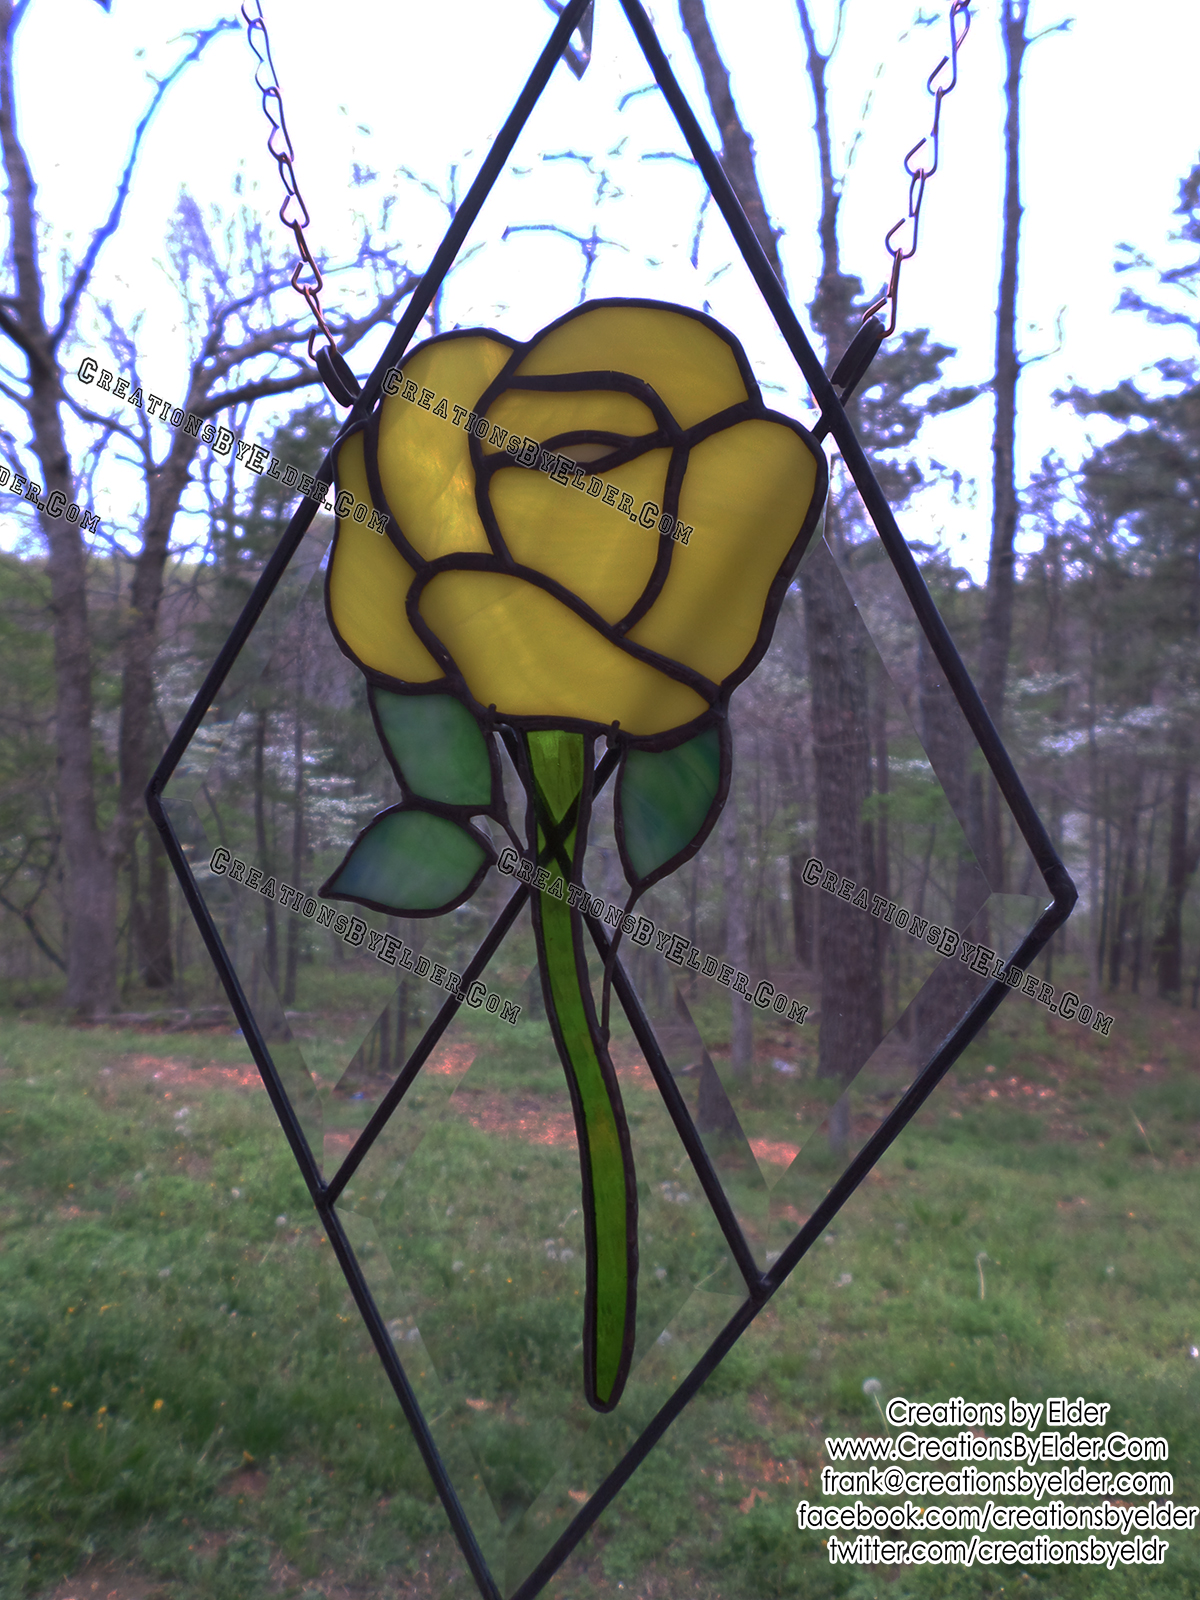 sg stained glass suncatcher yellow rose on bevels art glass arkansas oklahoma nwa northwest neo northeast